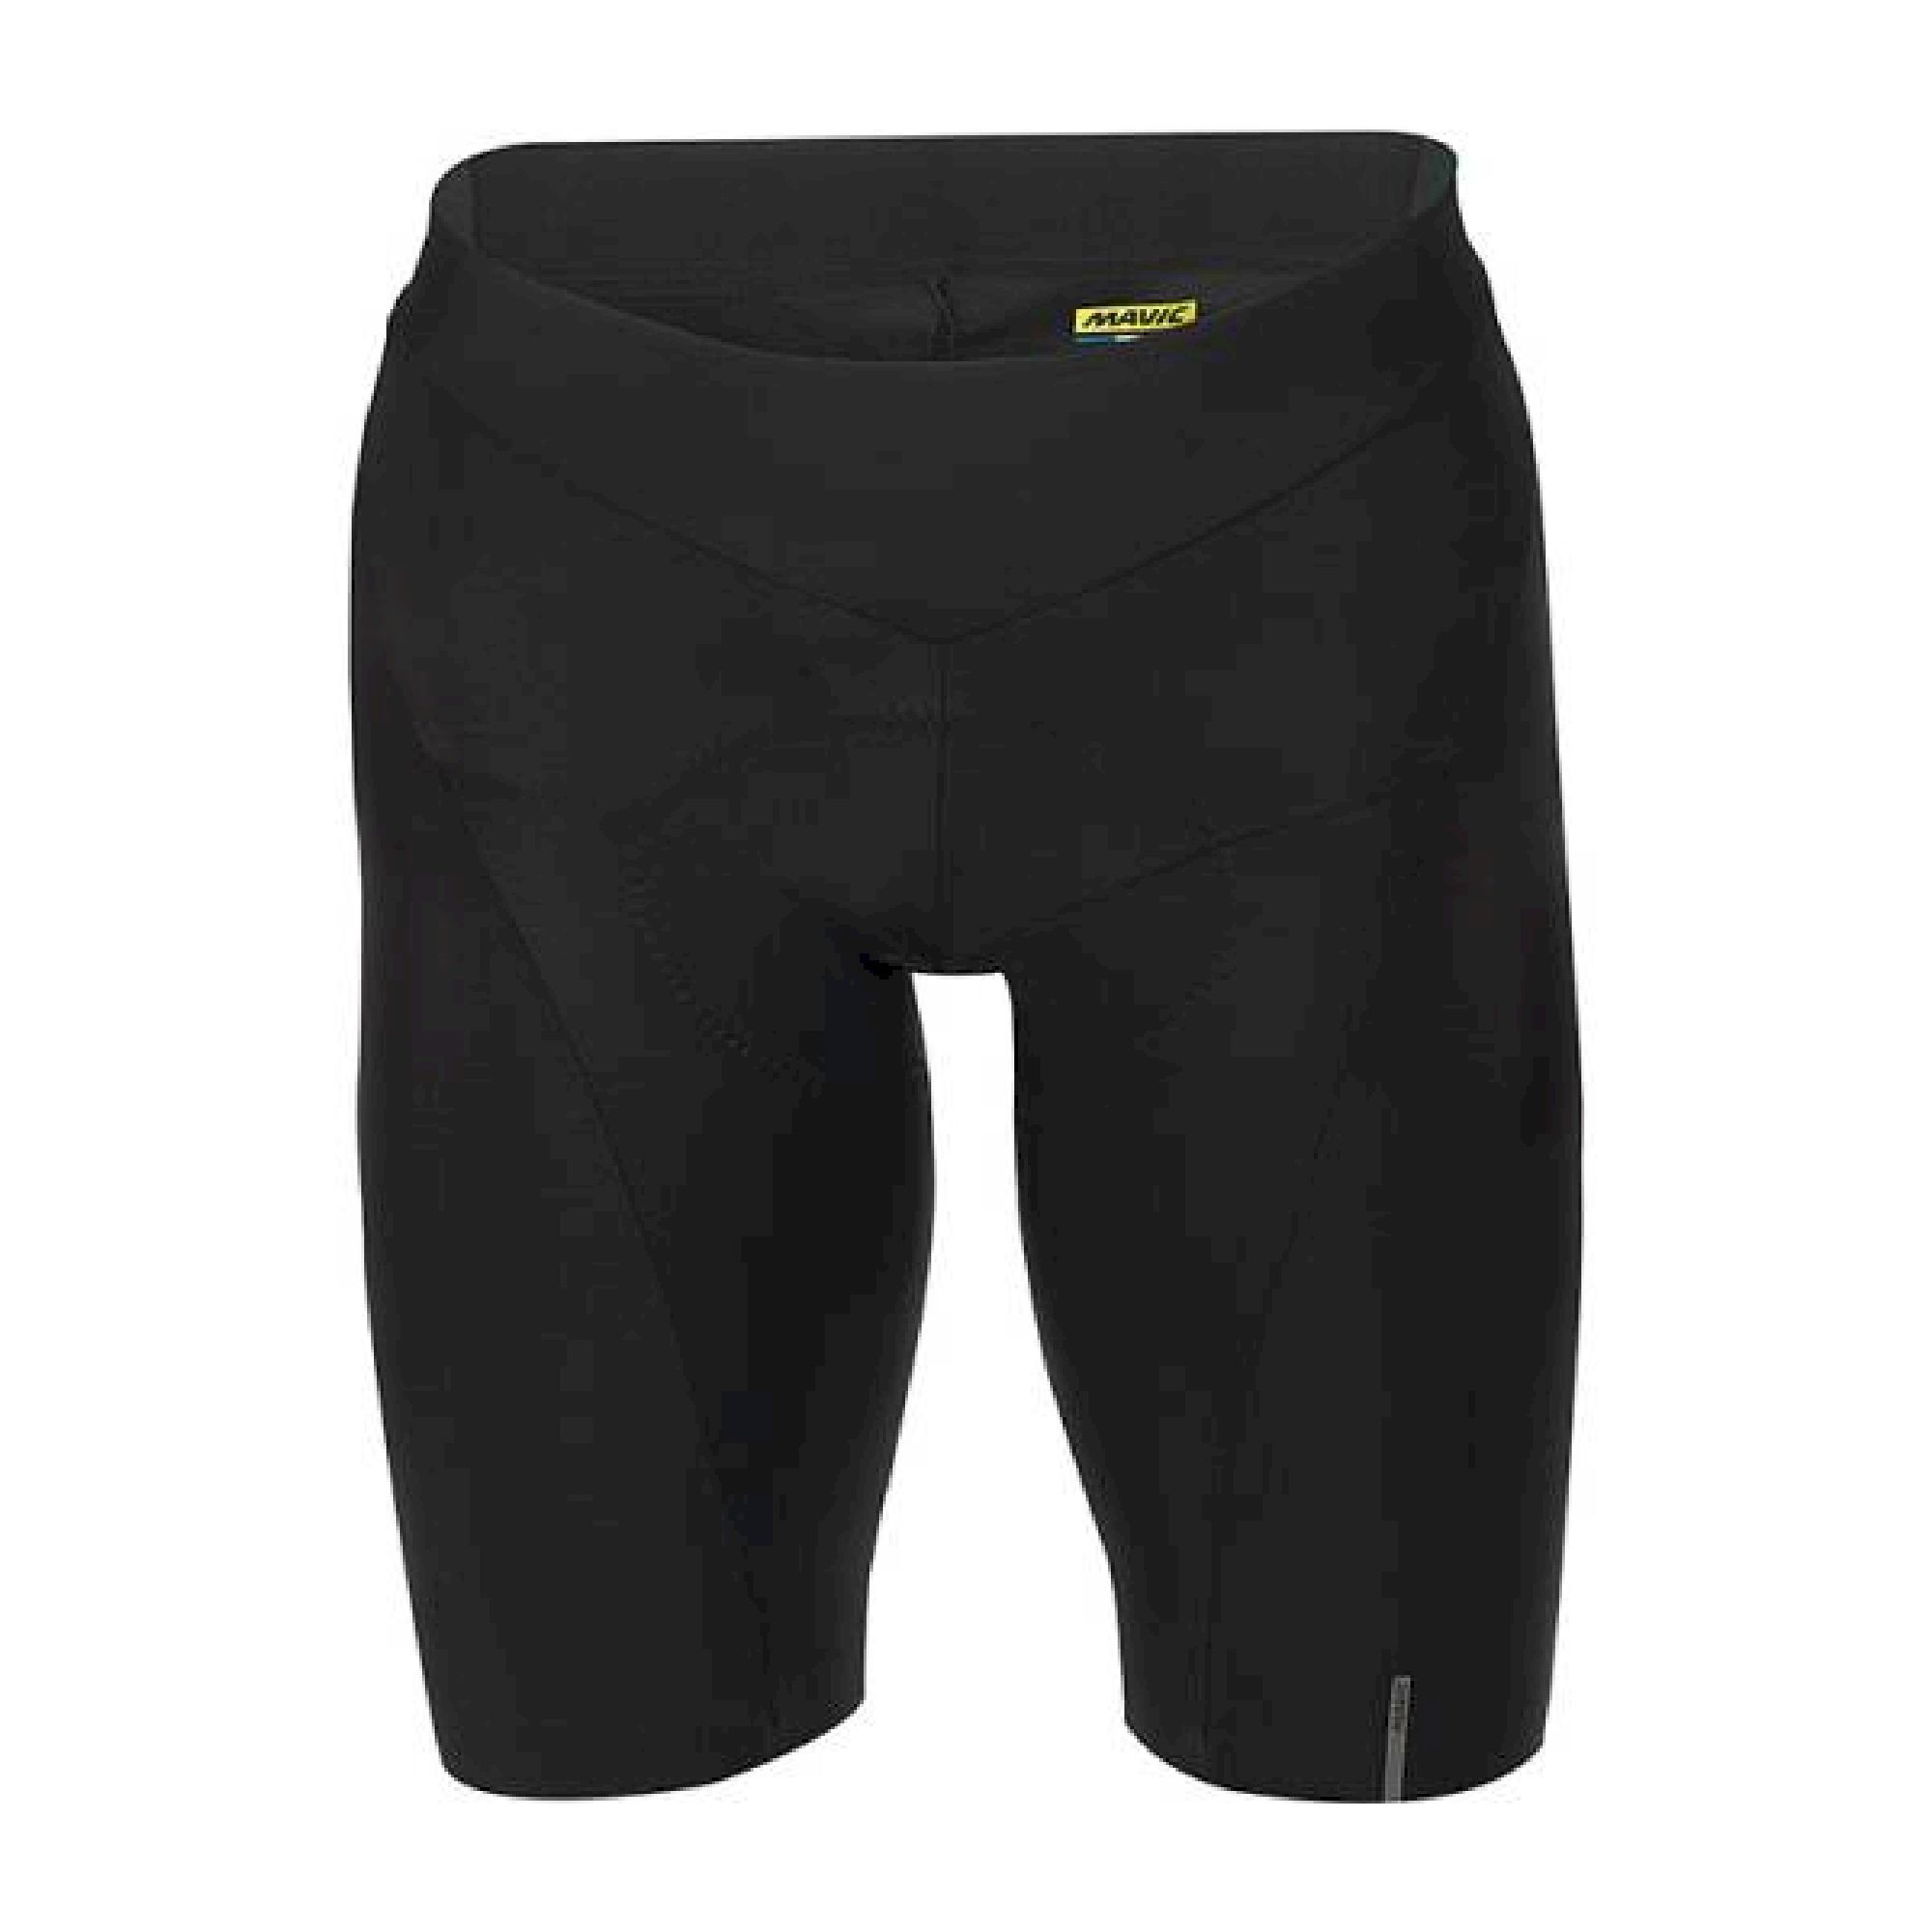 Mavic Essential - Cycling shorts - Men's